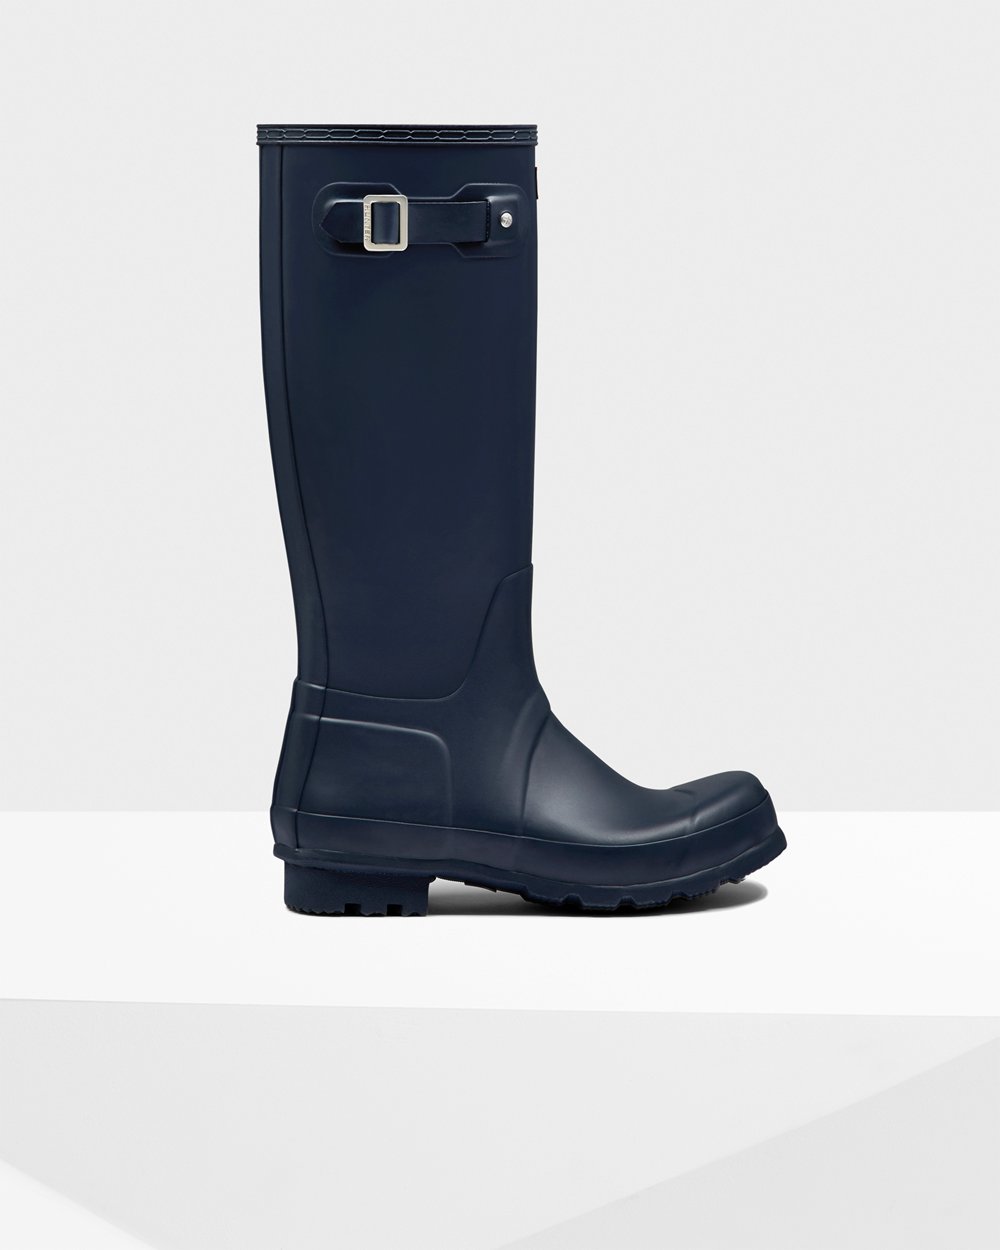 Mens Tall Rain Boots - Hunter Original (65XJZNYHA) - Navy